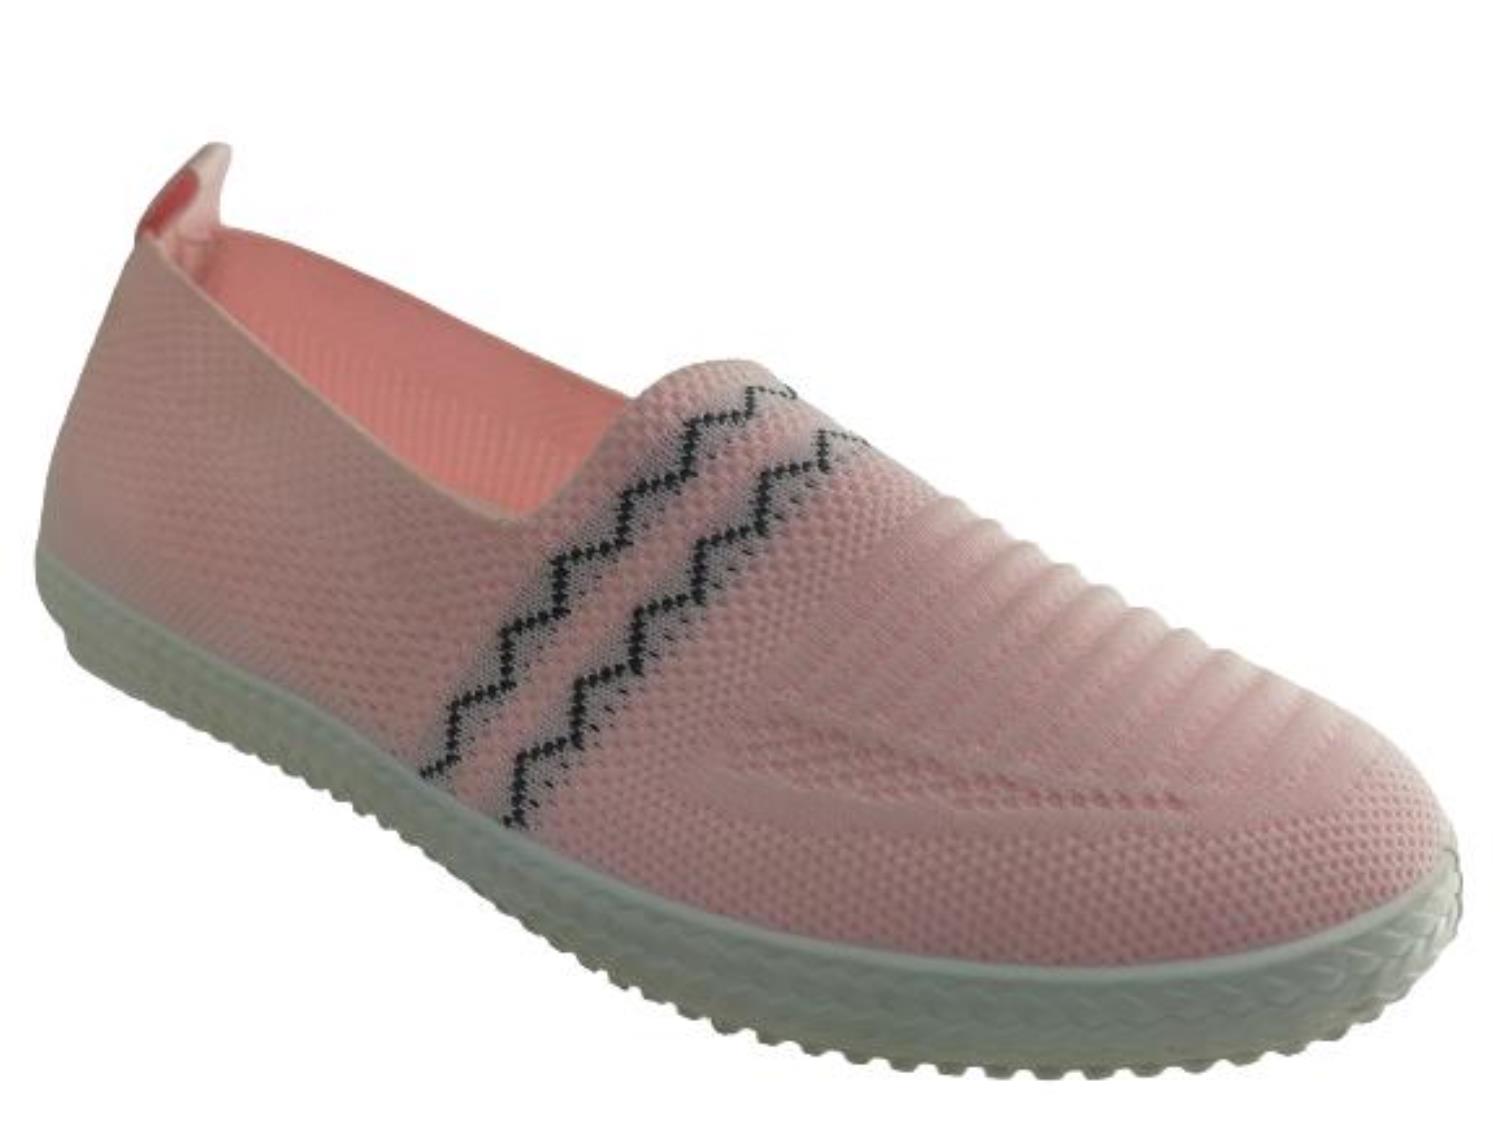 Seastar Brand Women's SS-5010 Slipons Comfort Sports Belly Shoes